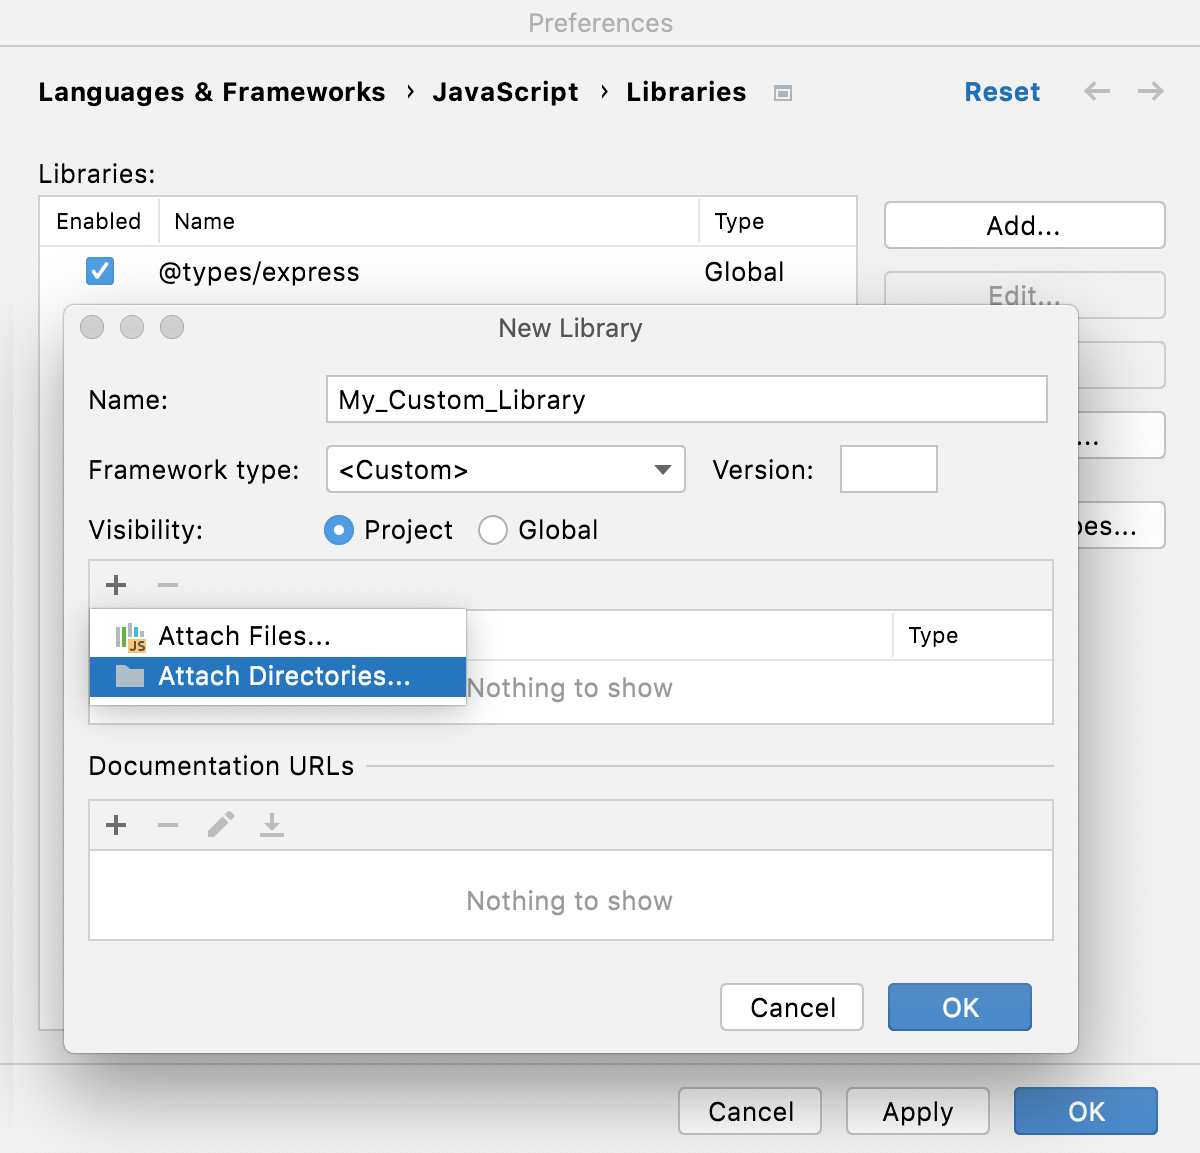 Configure custom library: Add files/folders